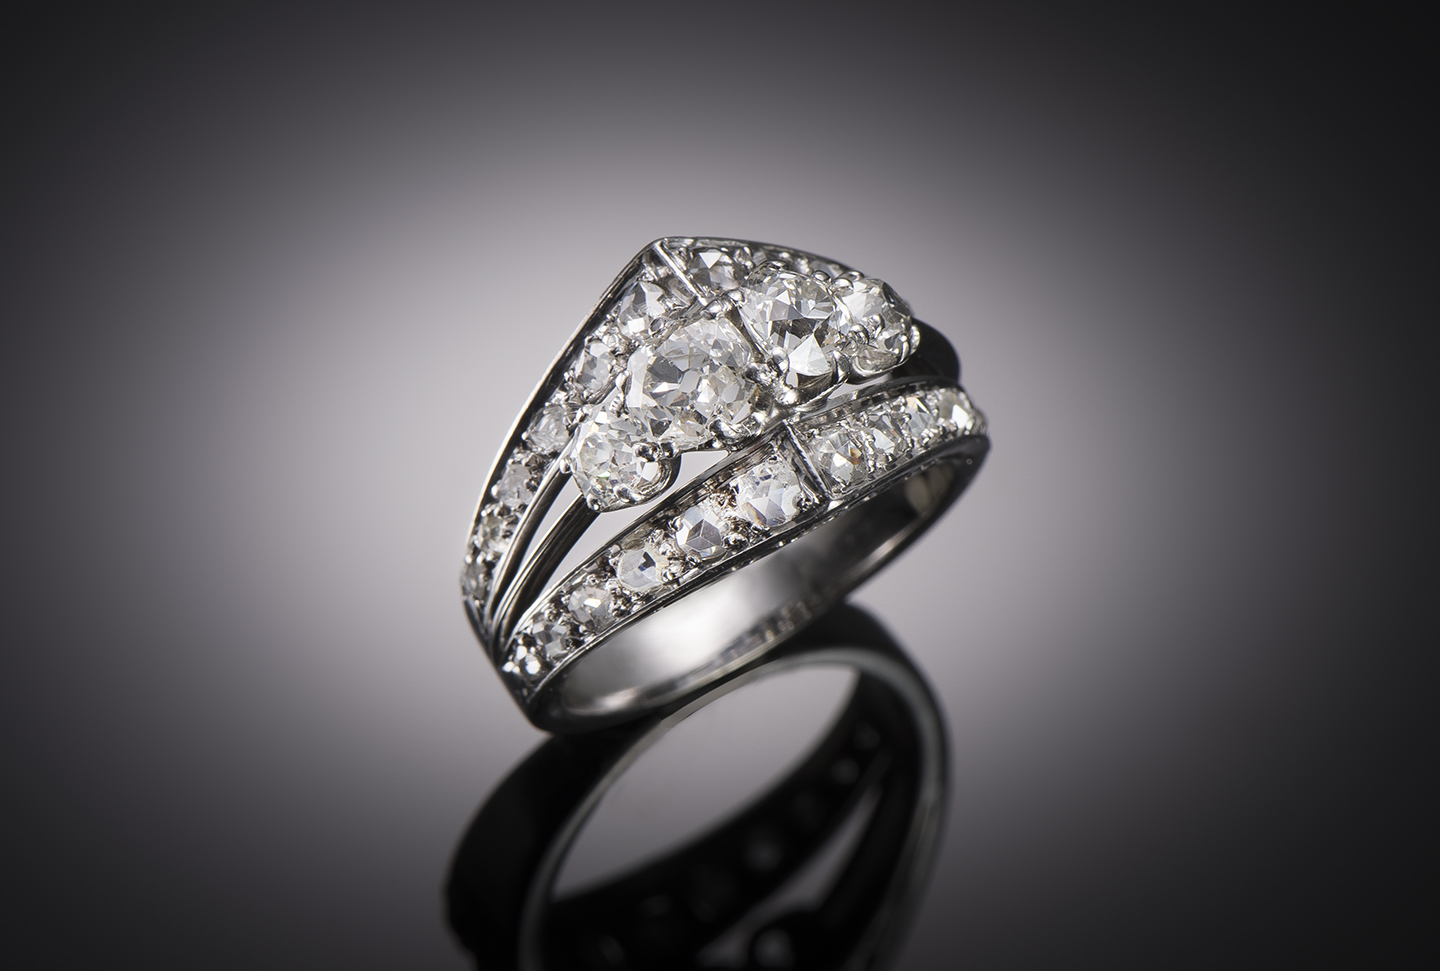 French diamond ring (1.40 carat) circa 1935-1